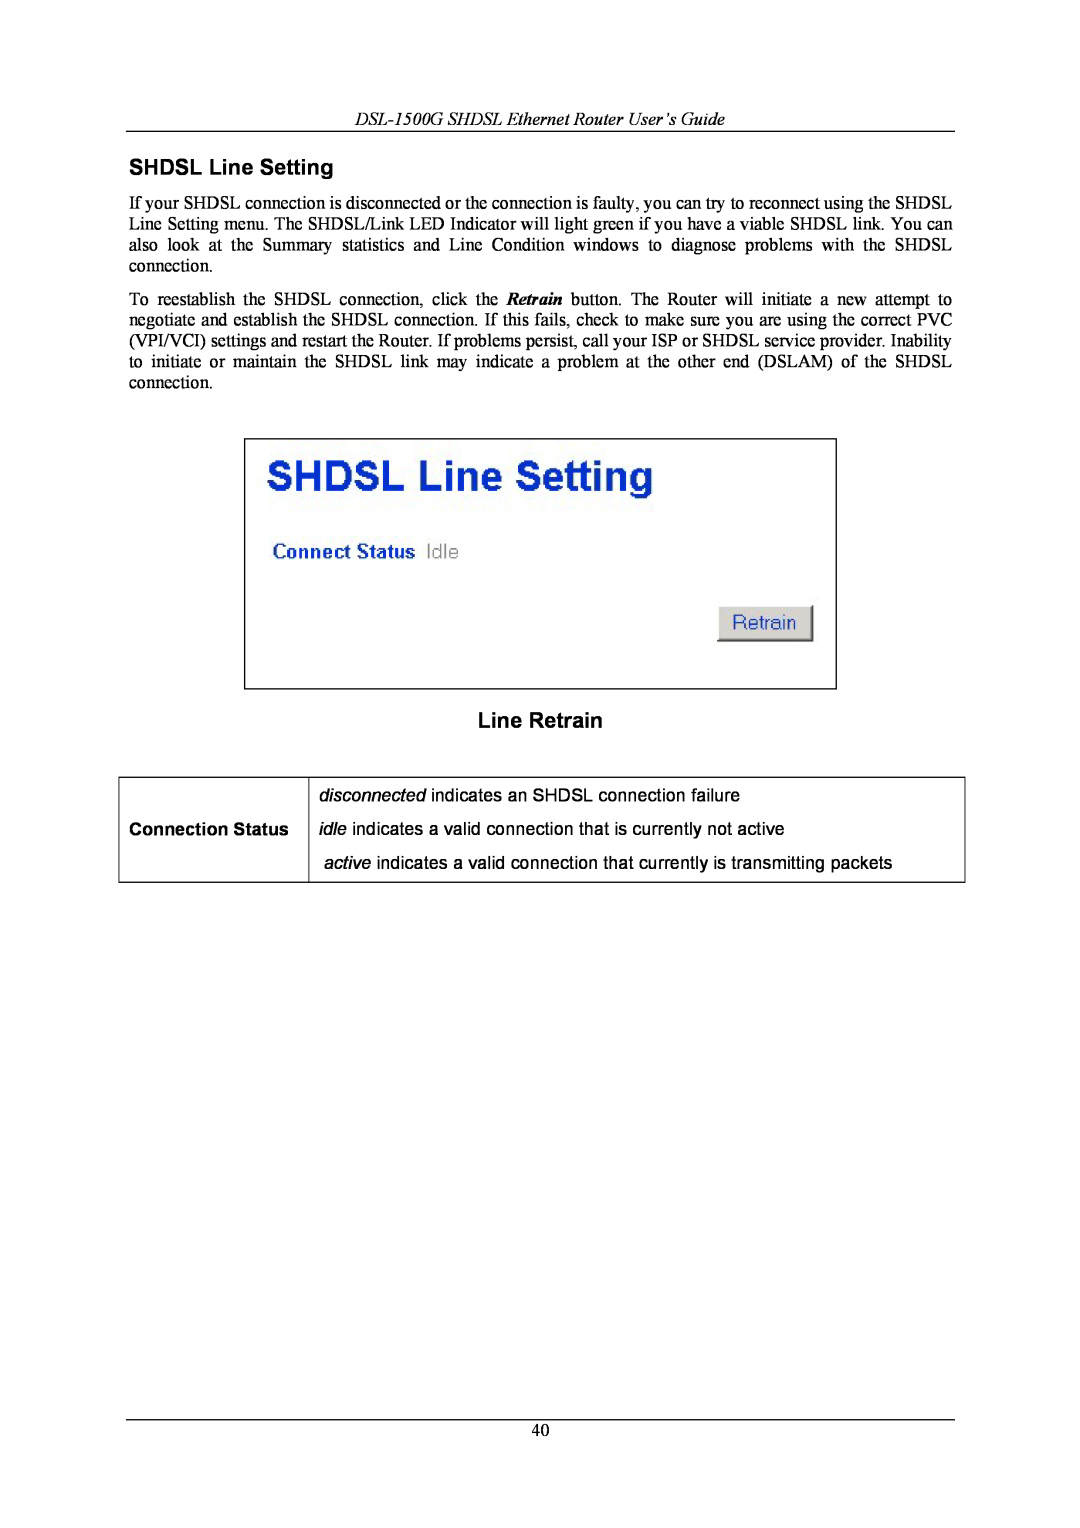 D-Link manual SHDSL Line Setting, Line Retrain, DSL-1500G SHDSL Ethernet Router User’s Guide, Connection Status 